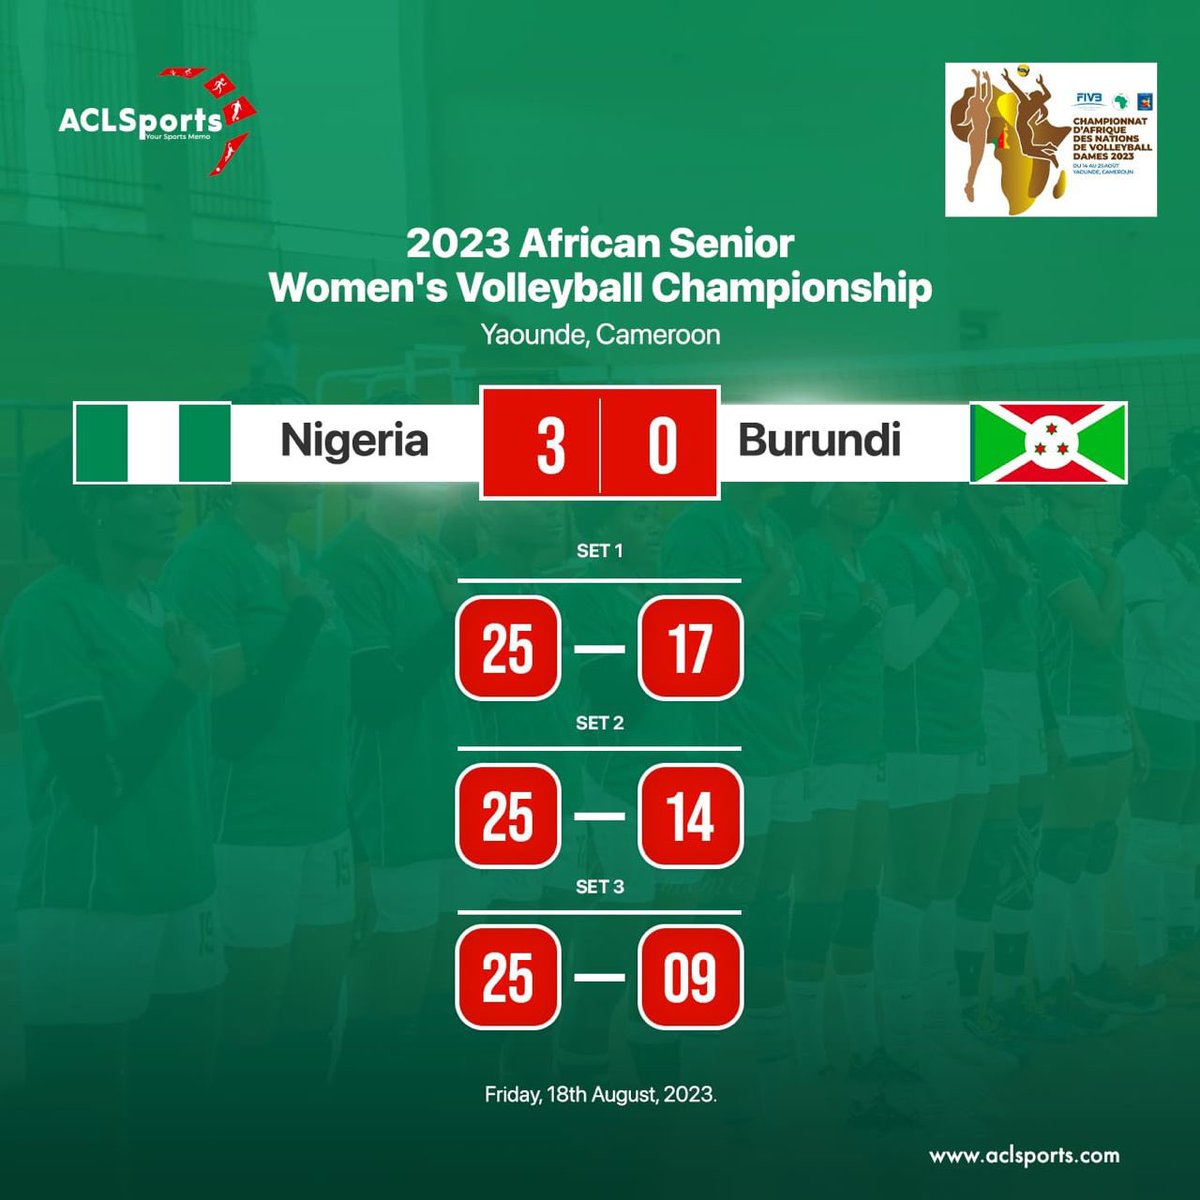 Nigeria volleyball team won Burundi in Cameroon 🇨🇲.

#AfricanSports
#Volleyball